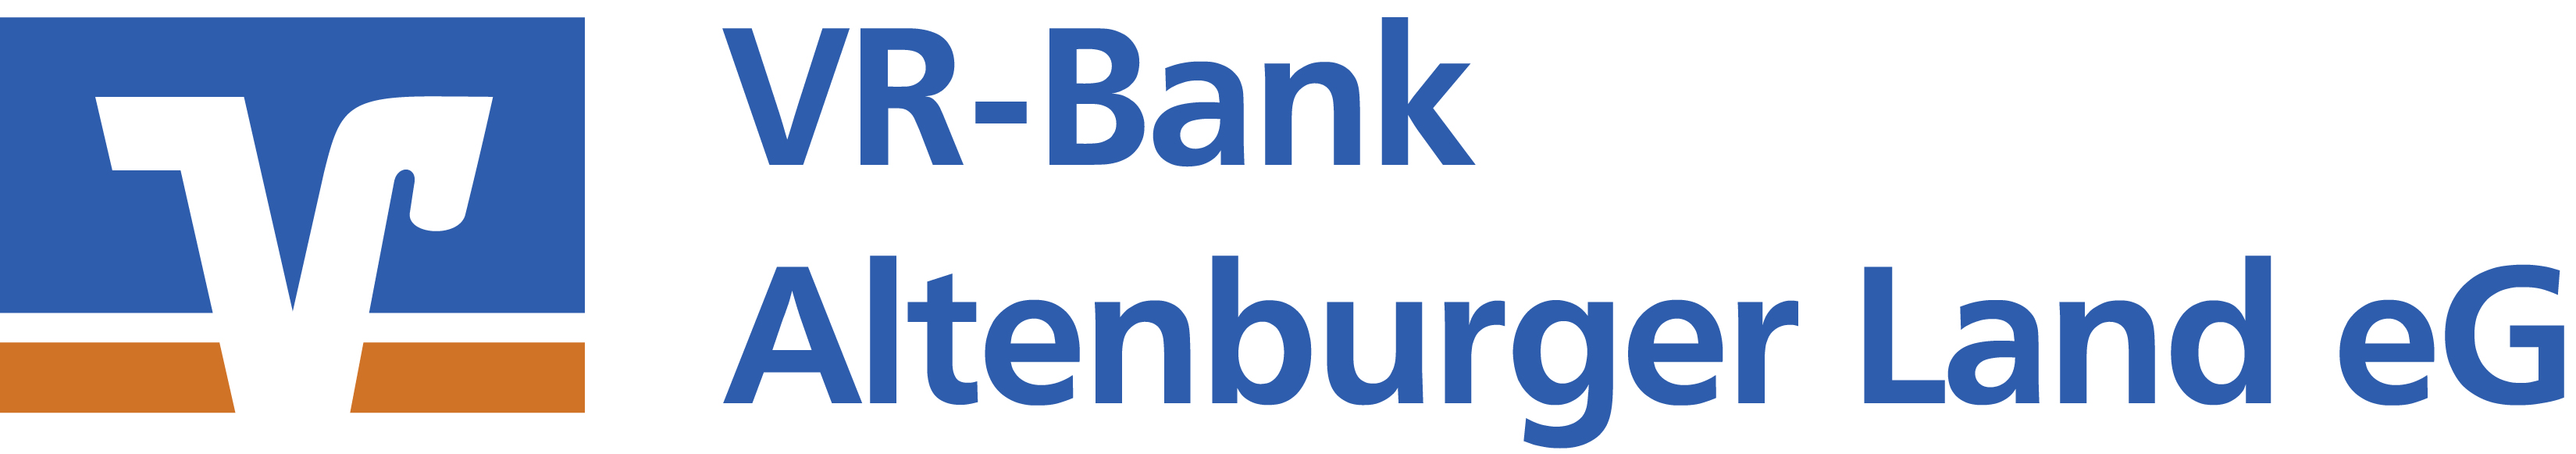 VR-Bank Altenburger Land eG